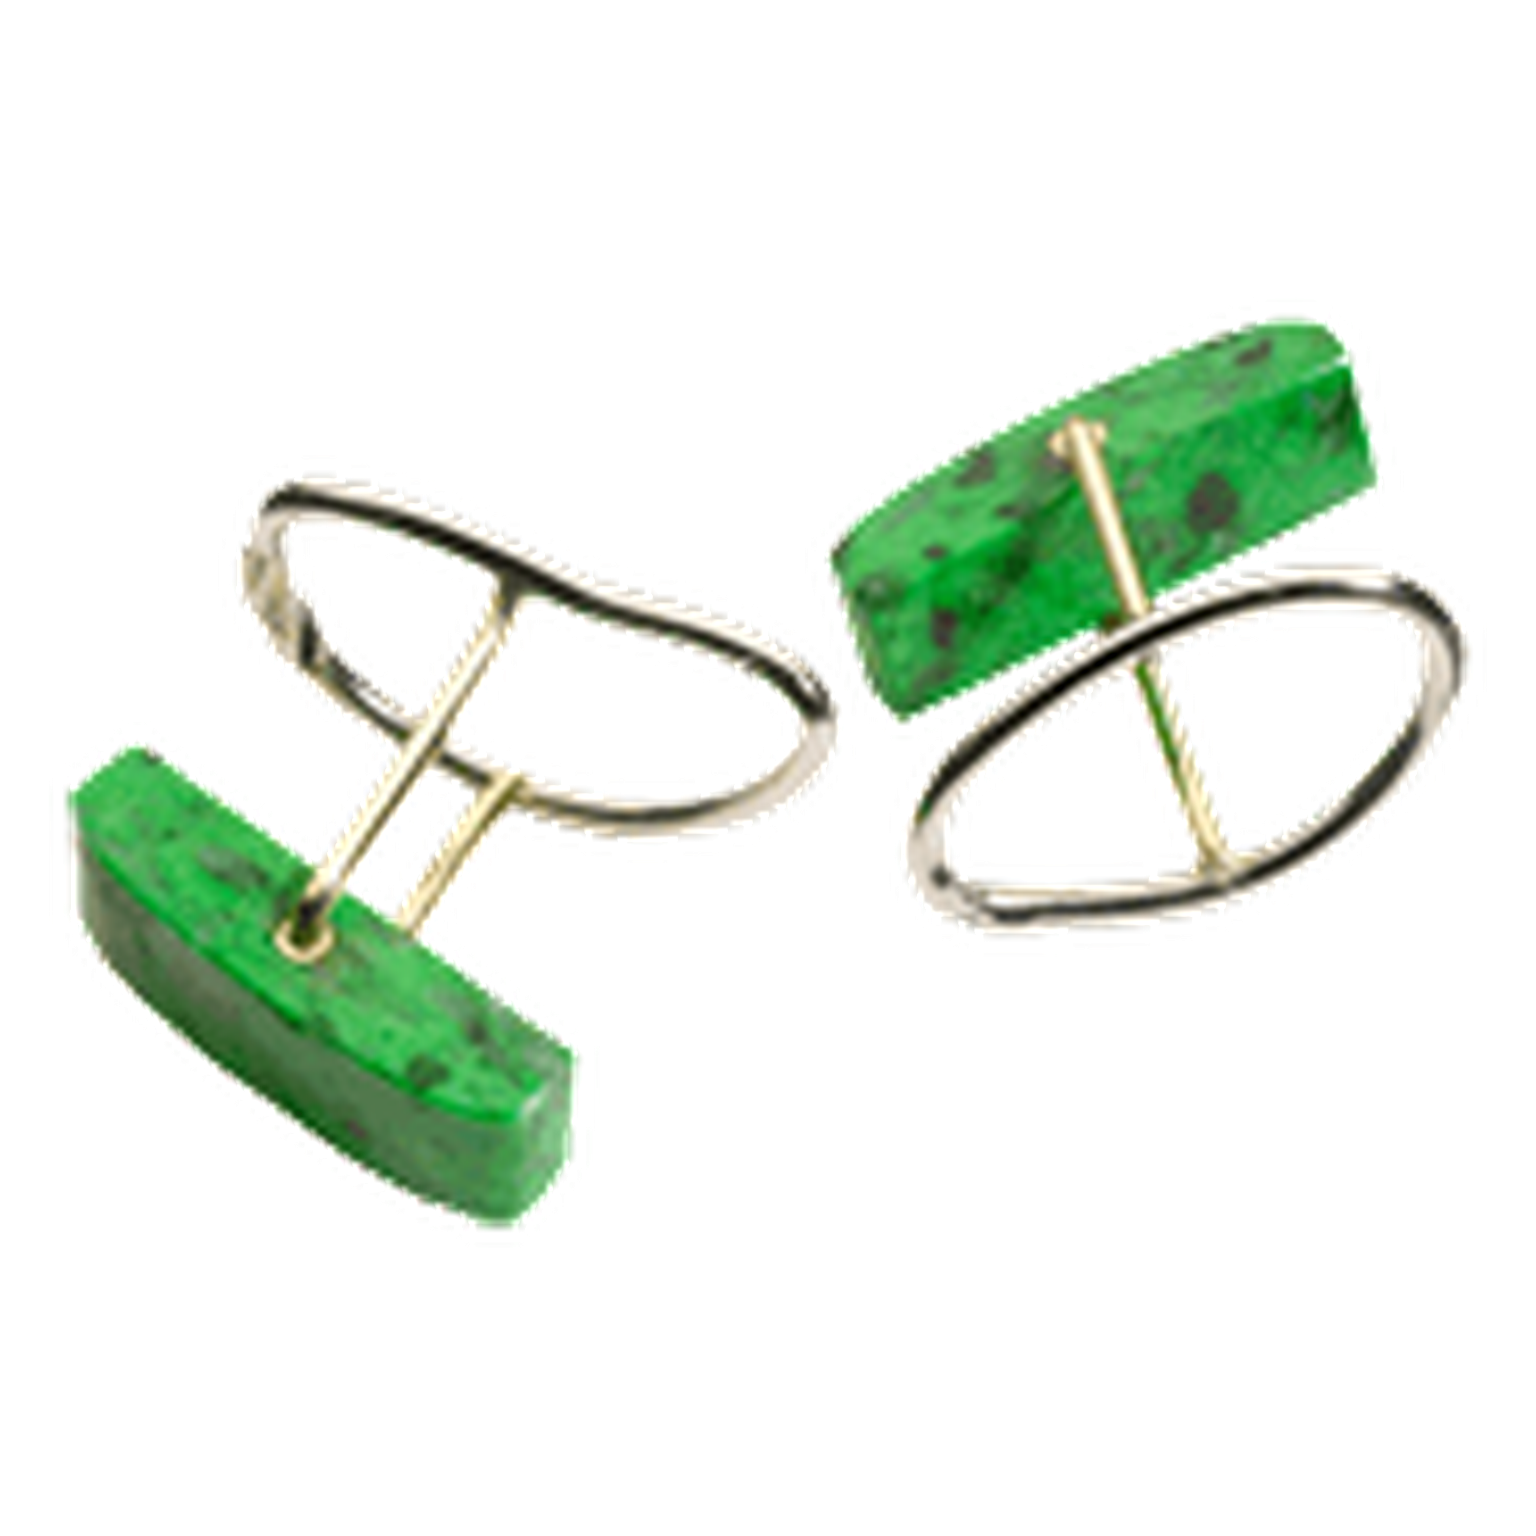 Alexandra Jefford Mr Green jadeite cufflinks_20131107_Thumbnail